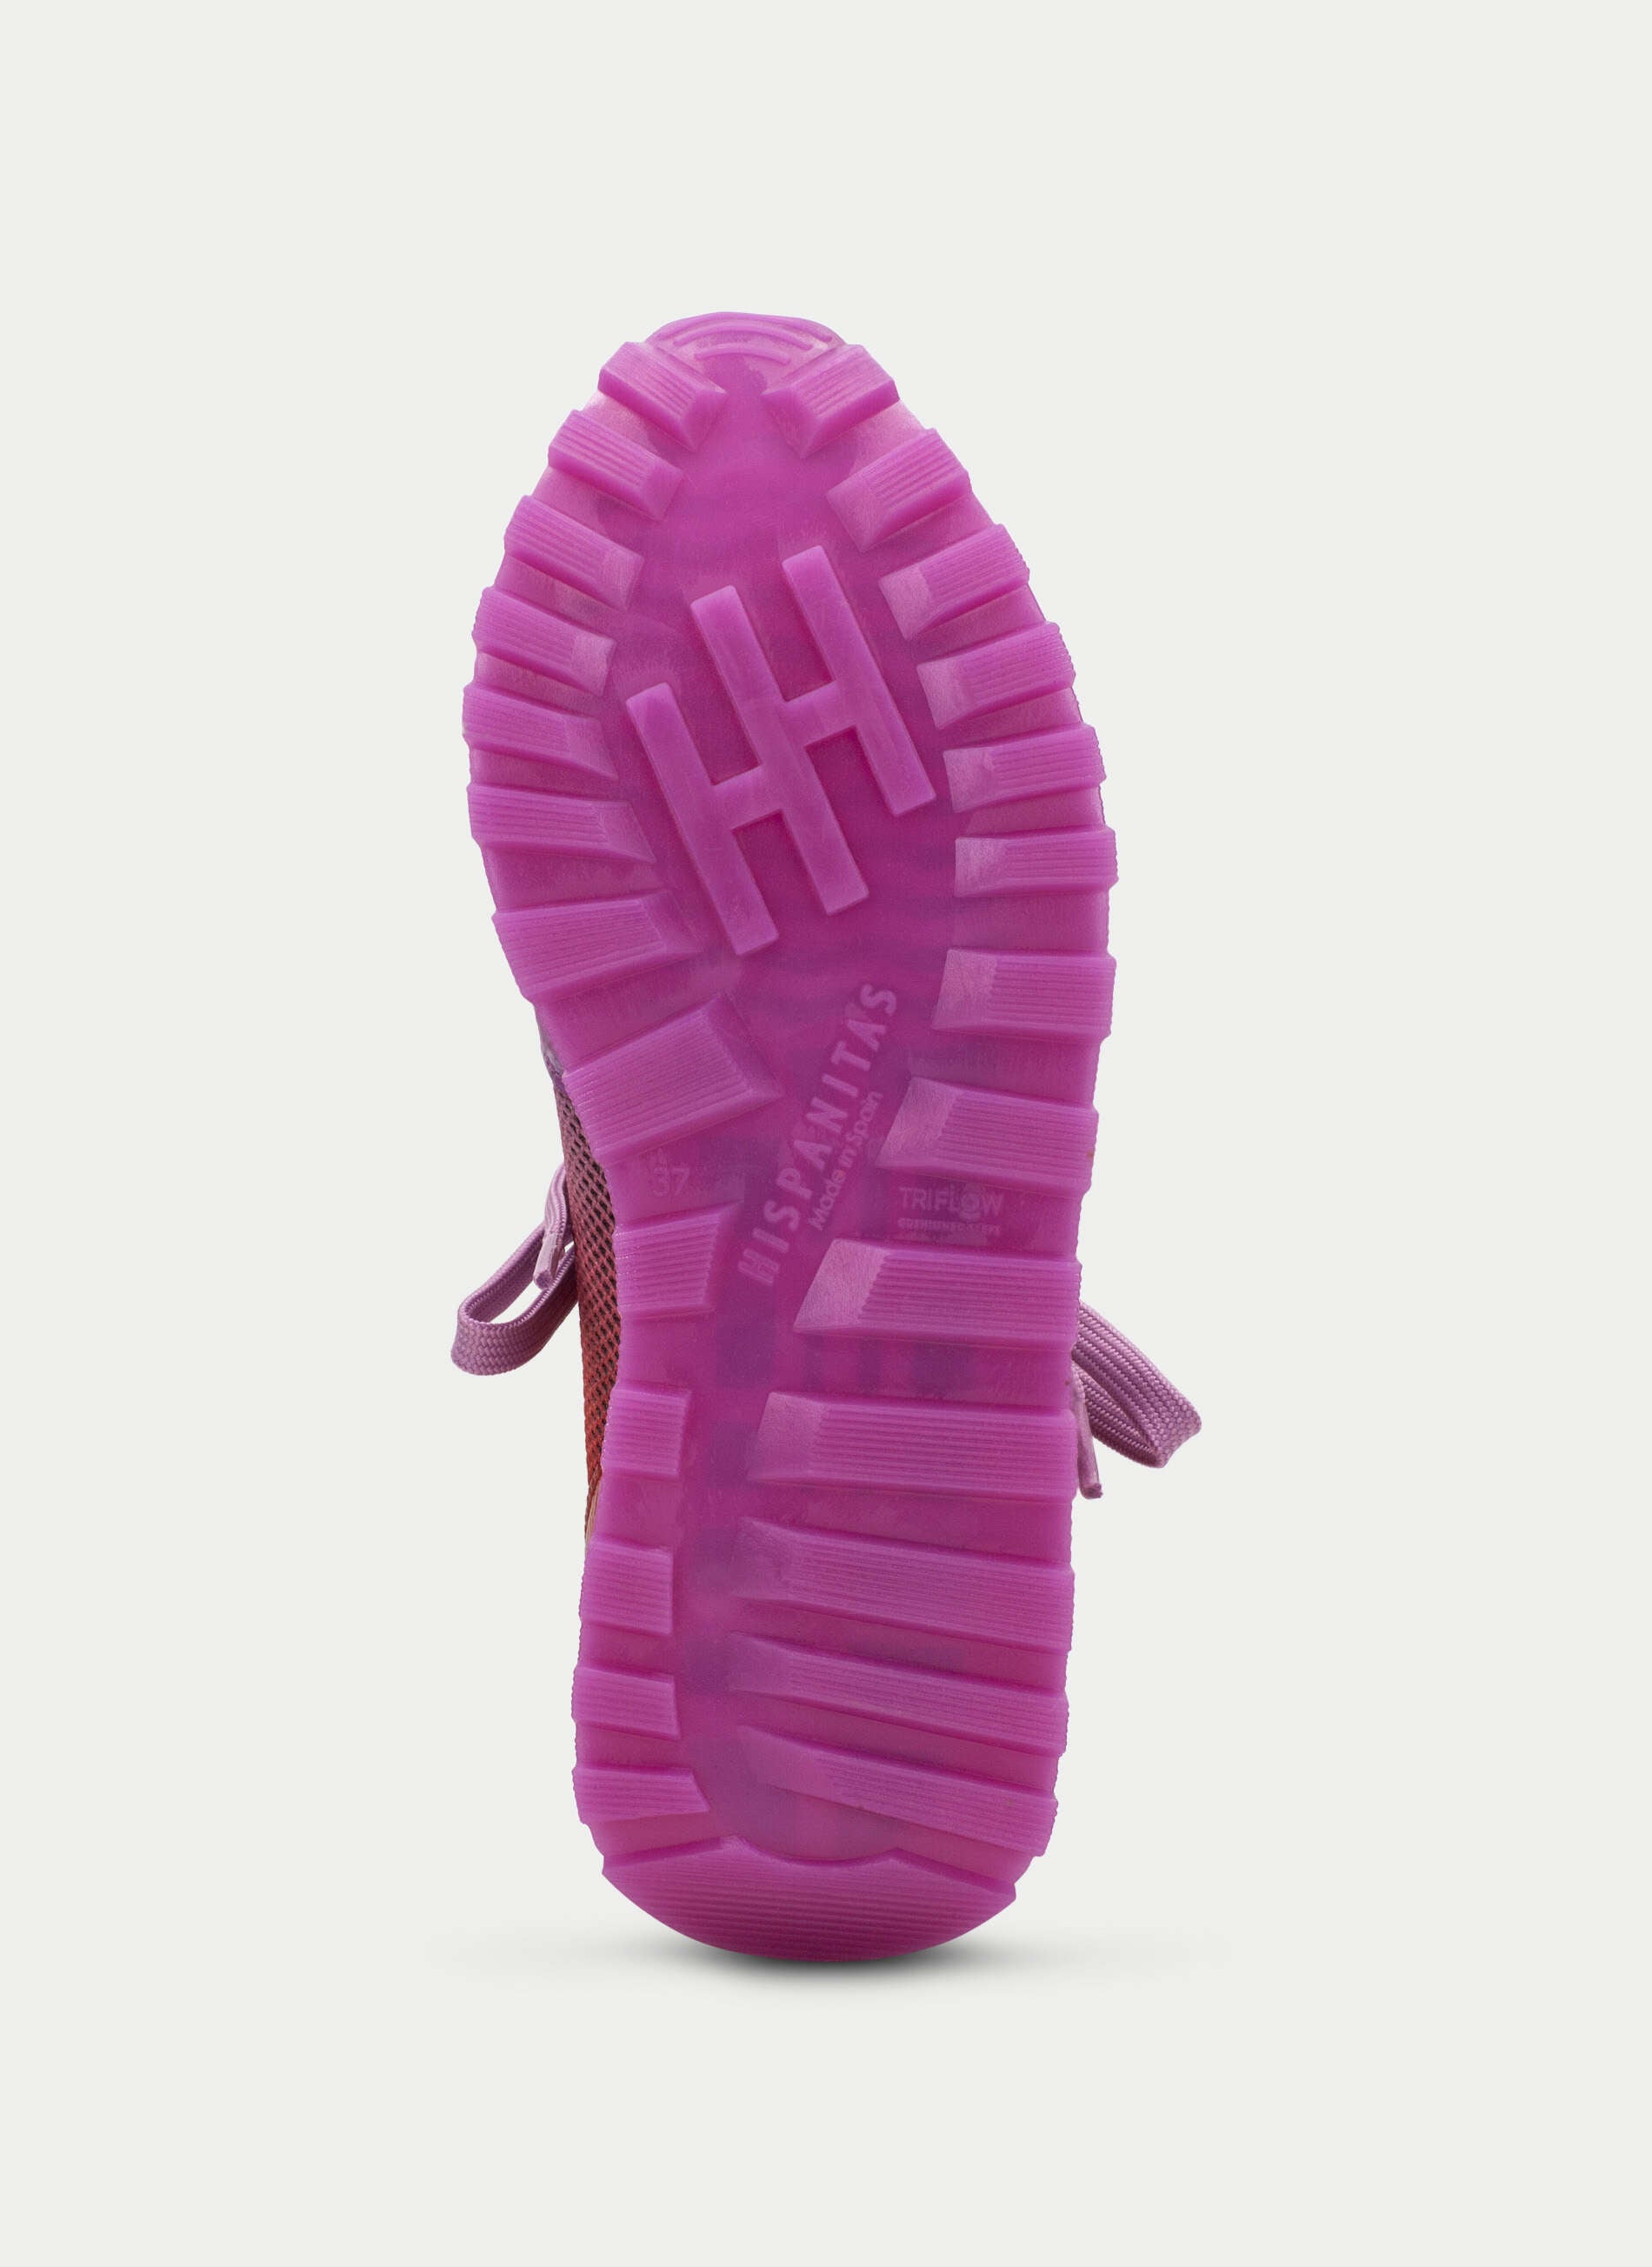 Comfort-focused microfiber lining inside the sneaker.